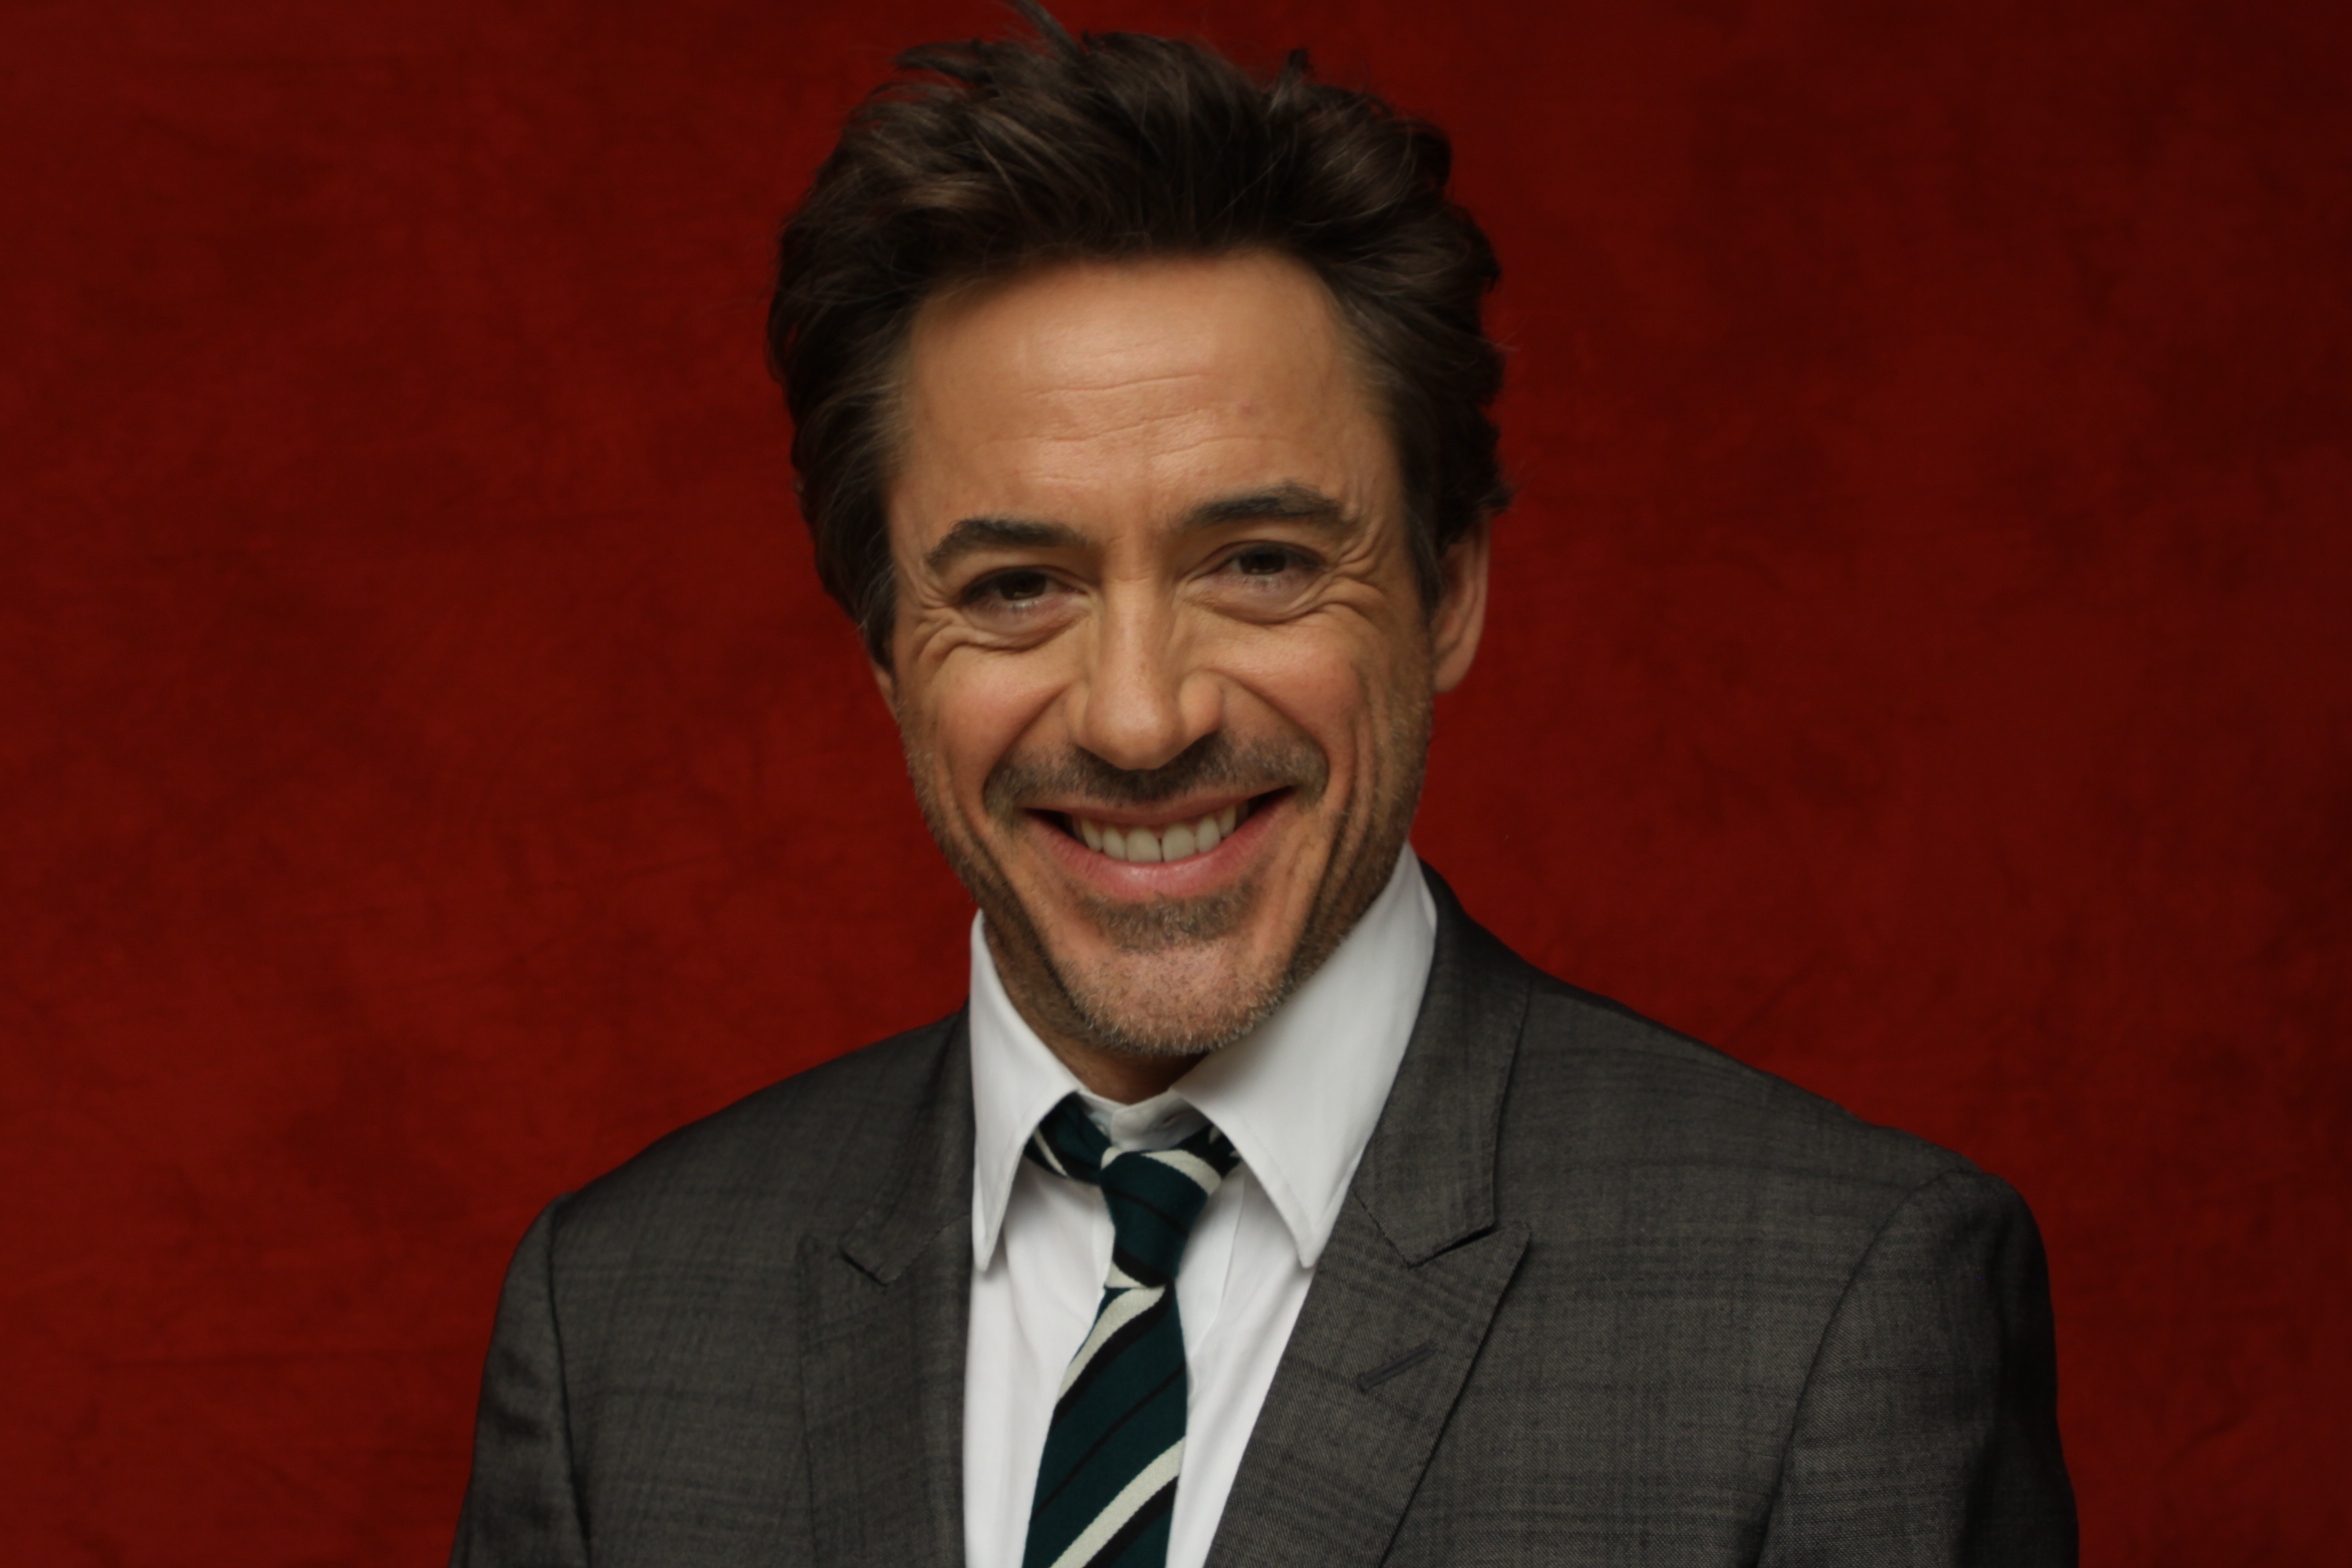 Robert Downey Jr. on Avengers: Endgame ending [WATCH] - IBTimes India